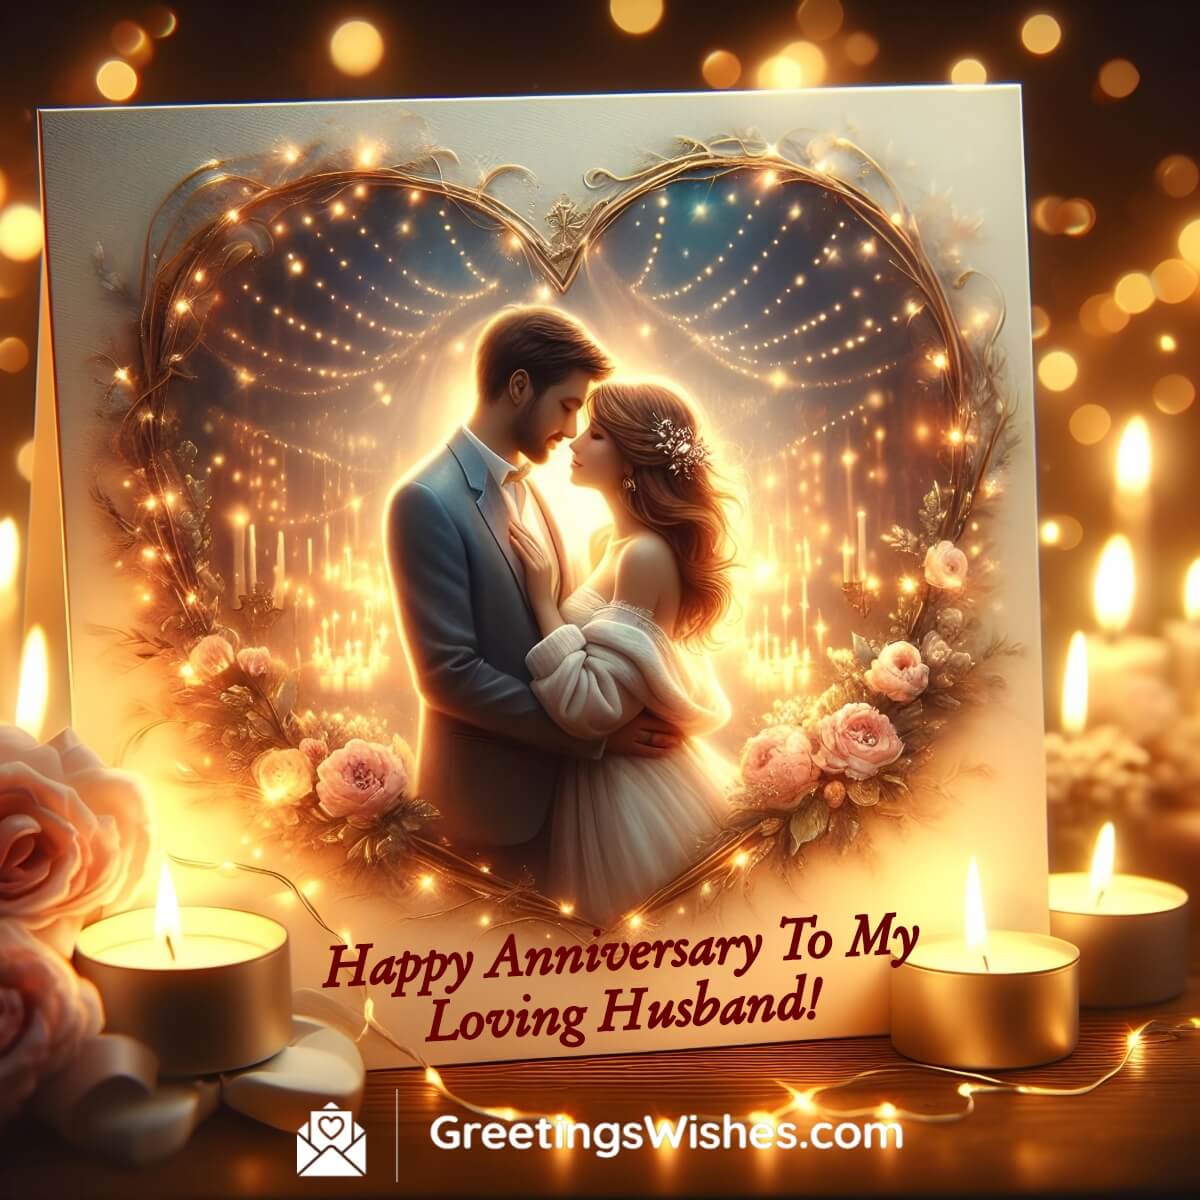 Happy Anniversary Wishes To Husband